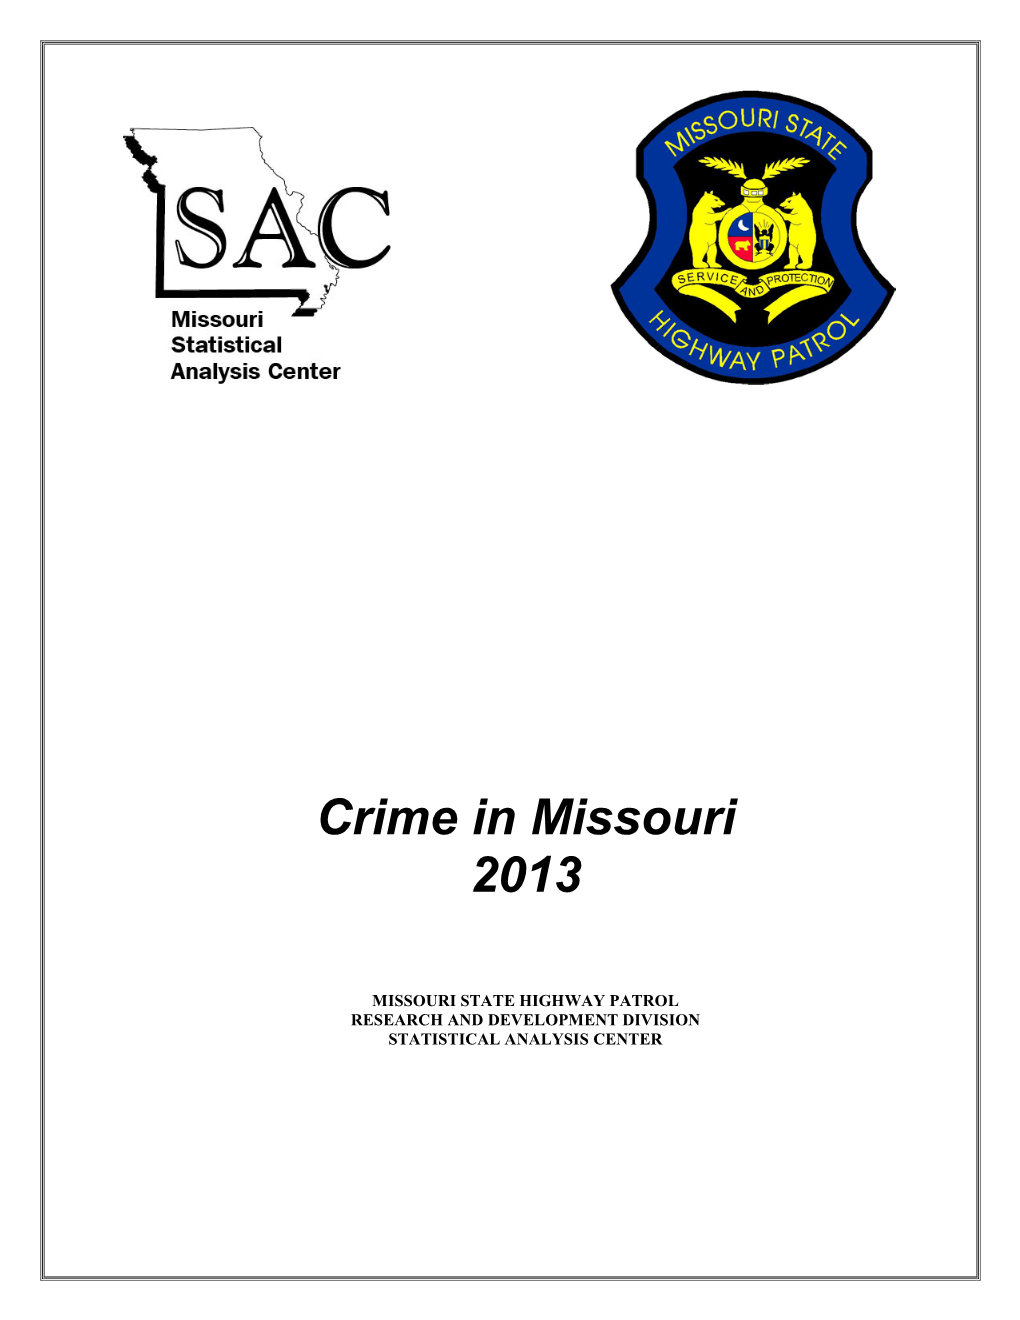 Crime in Missouri 2013